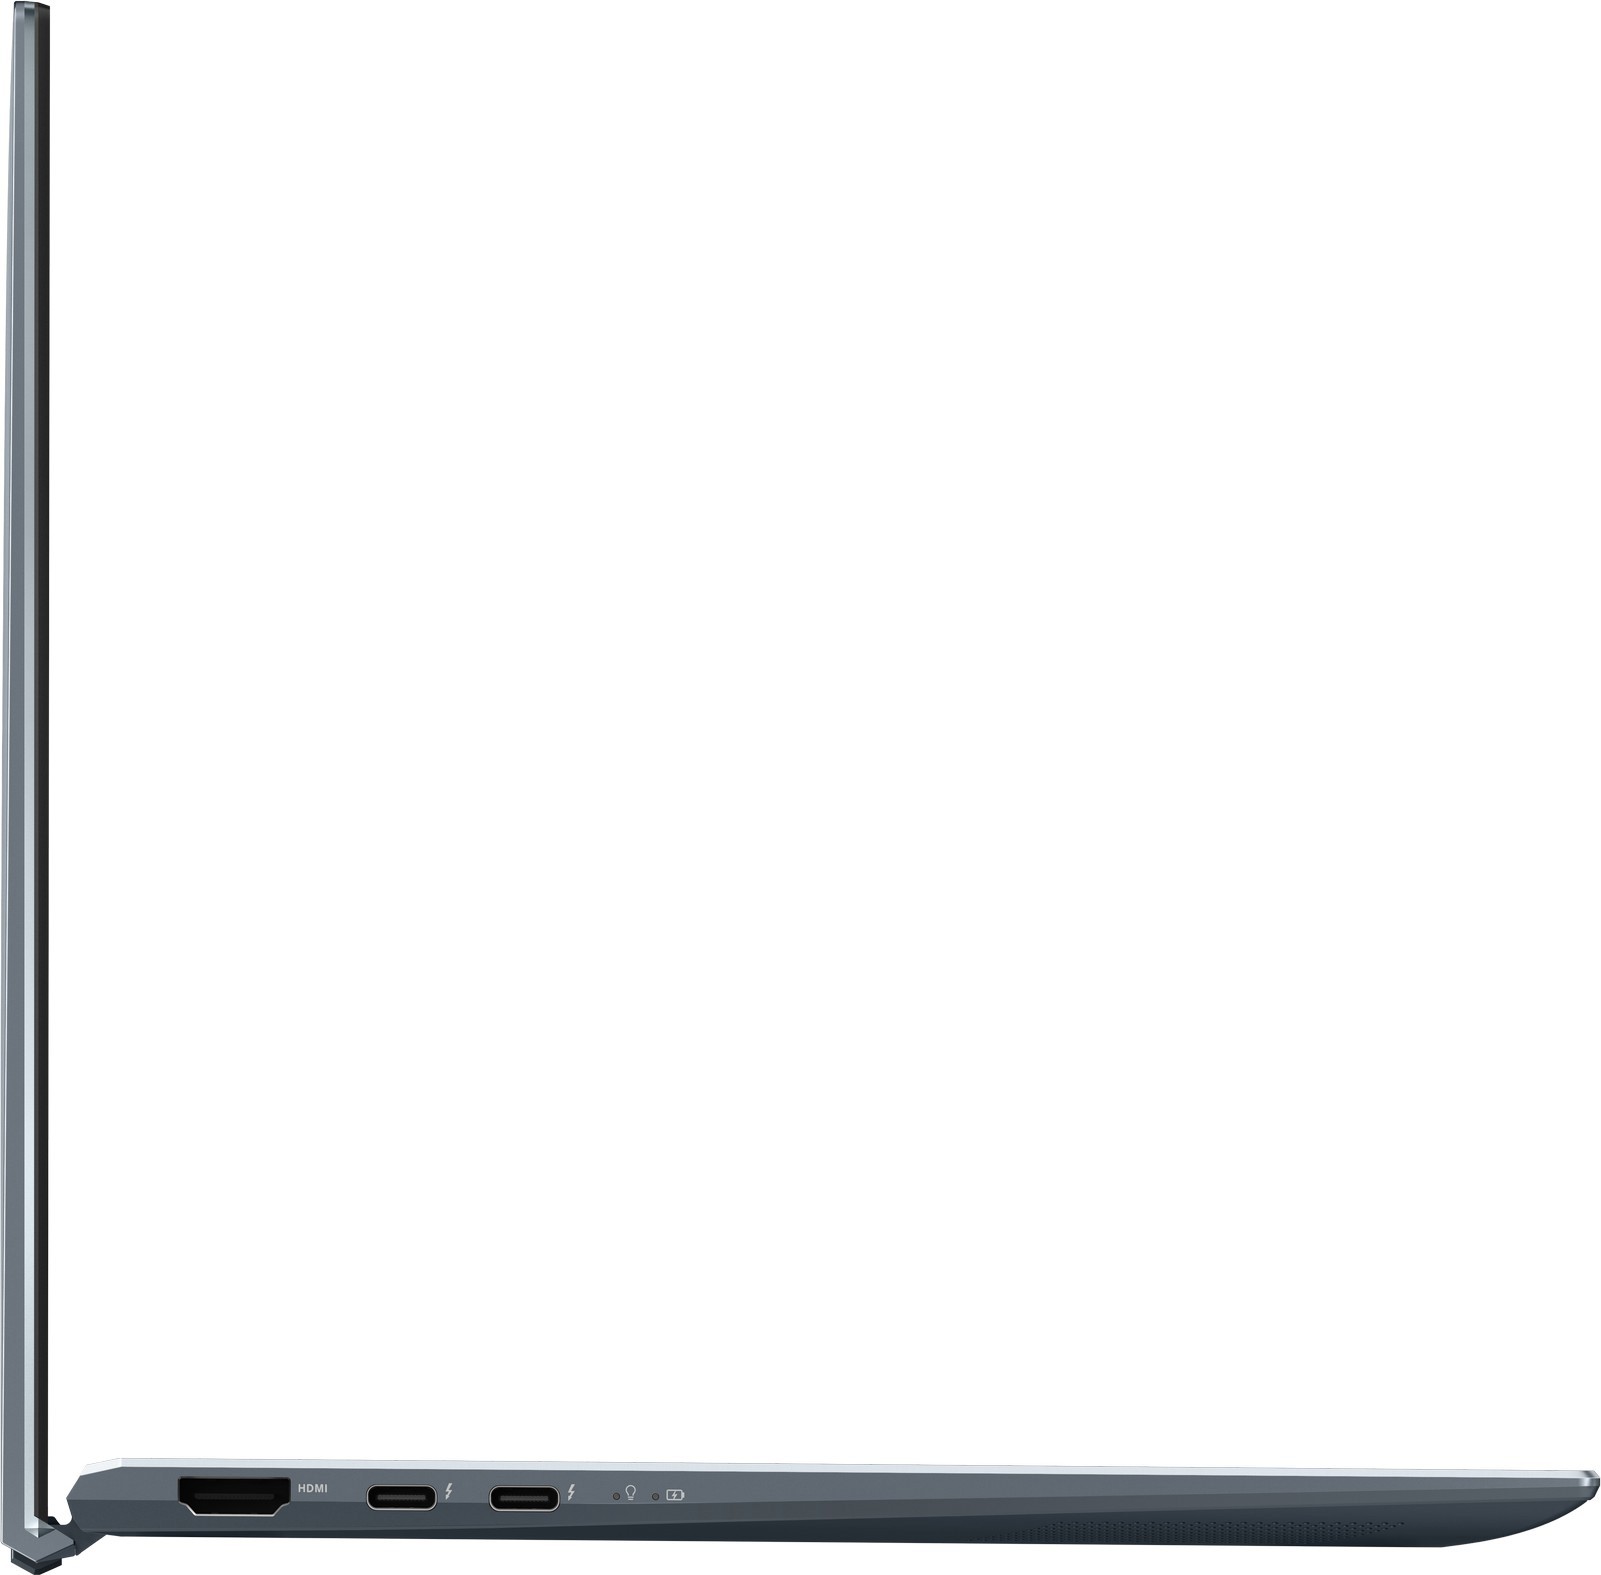 Ультрабук ASUS ZenBook UX425EA-KI358R, Grey (90NB0SM1-M14690)